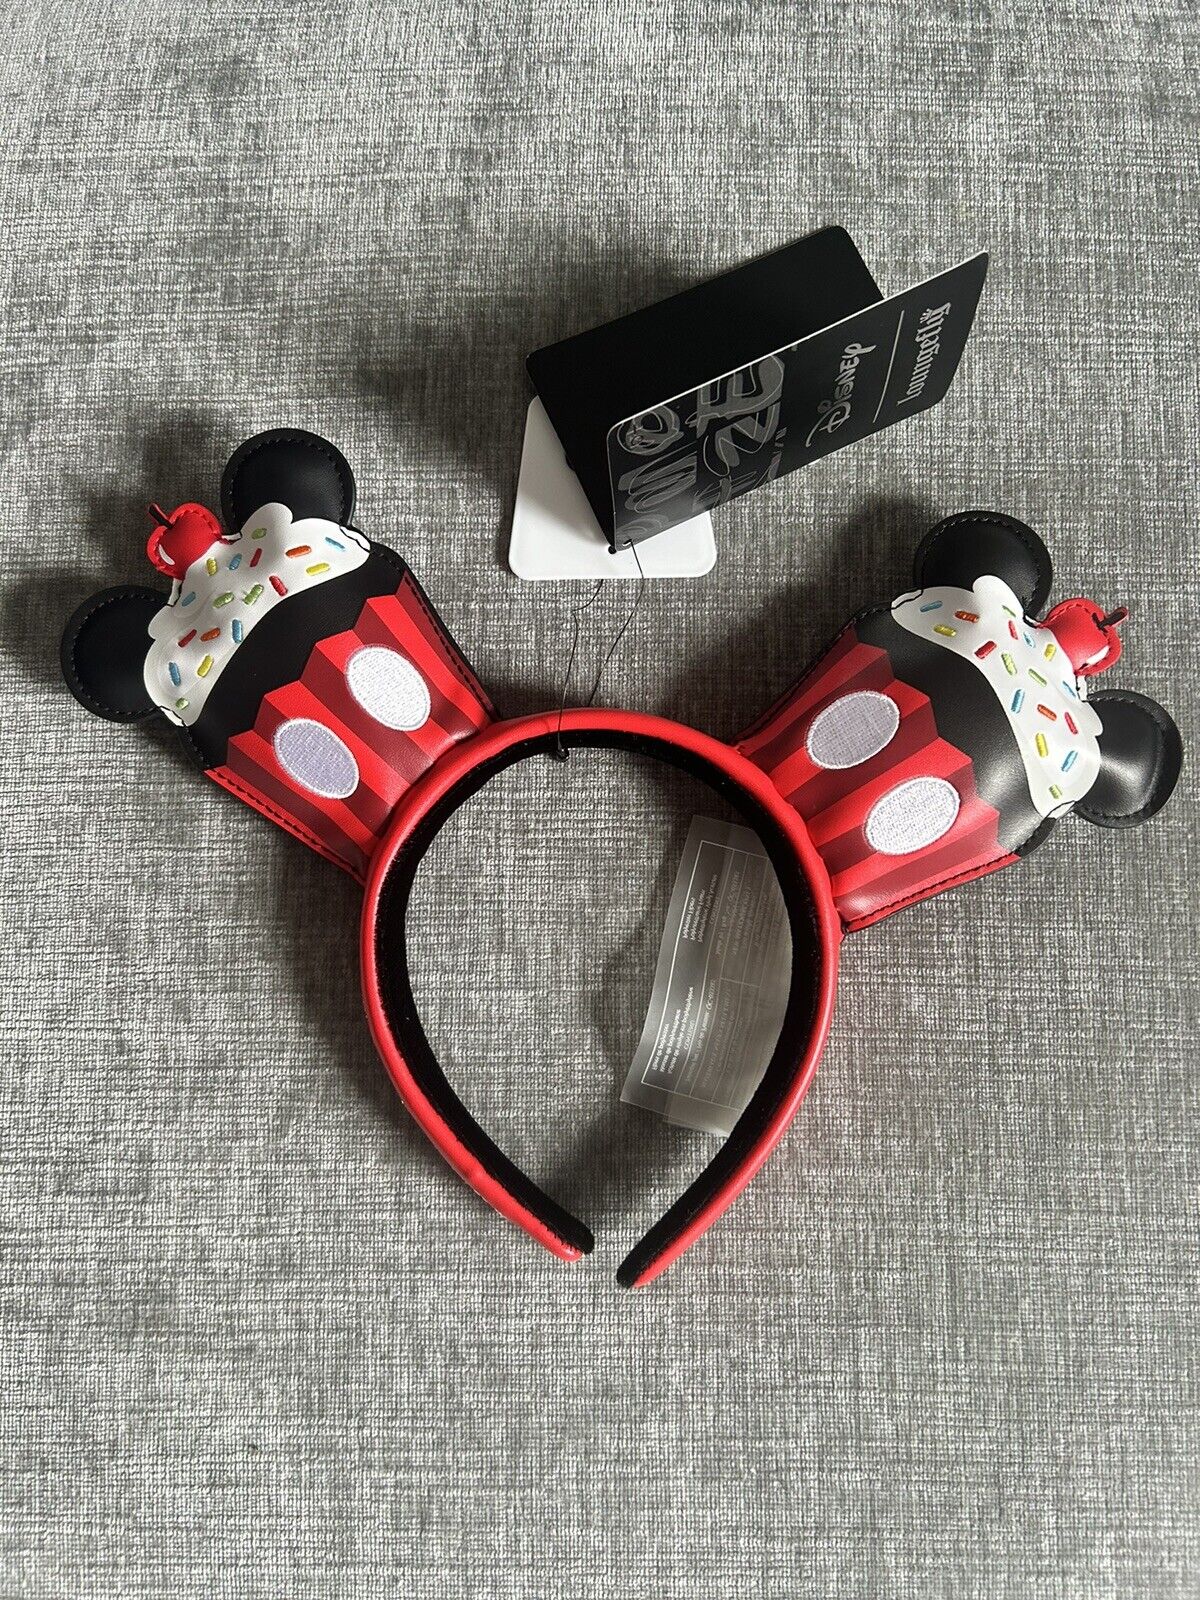 BNWT Loungefly Mickey Mouse Sprinkle Cupcake Ears Headband New